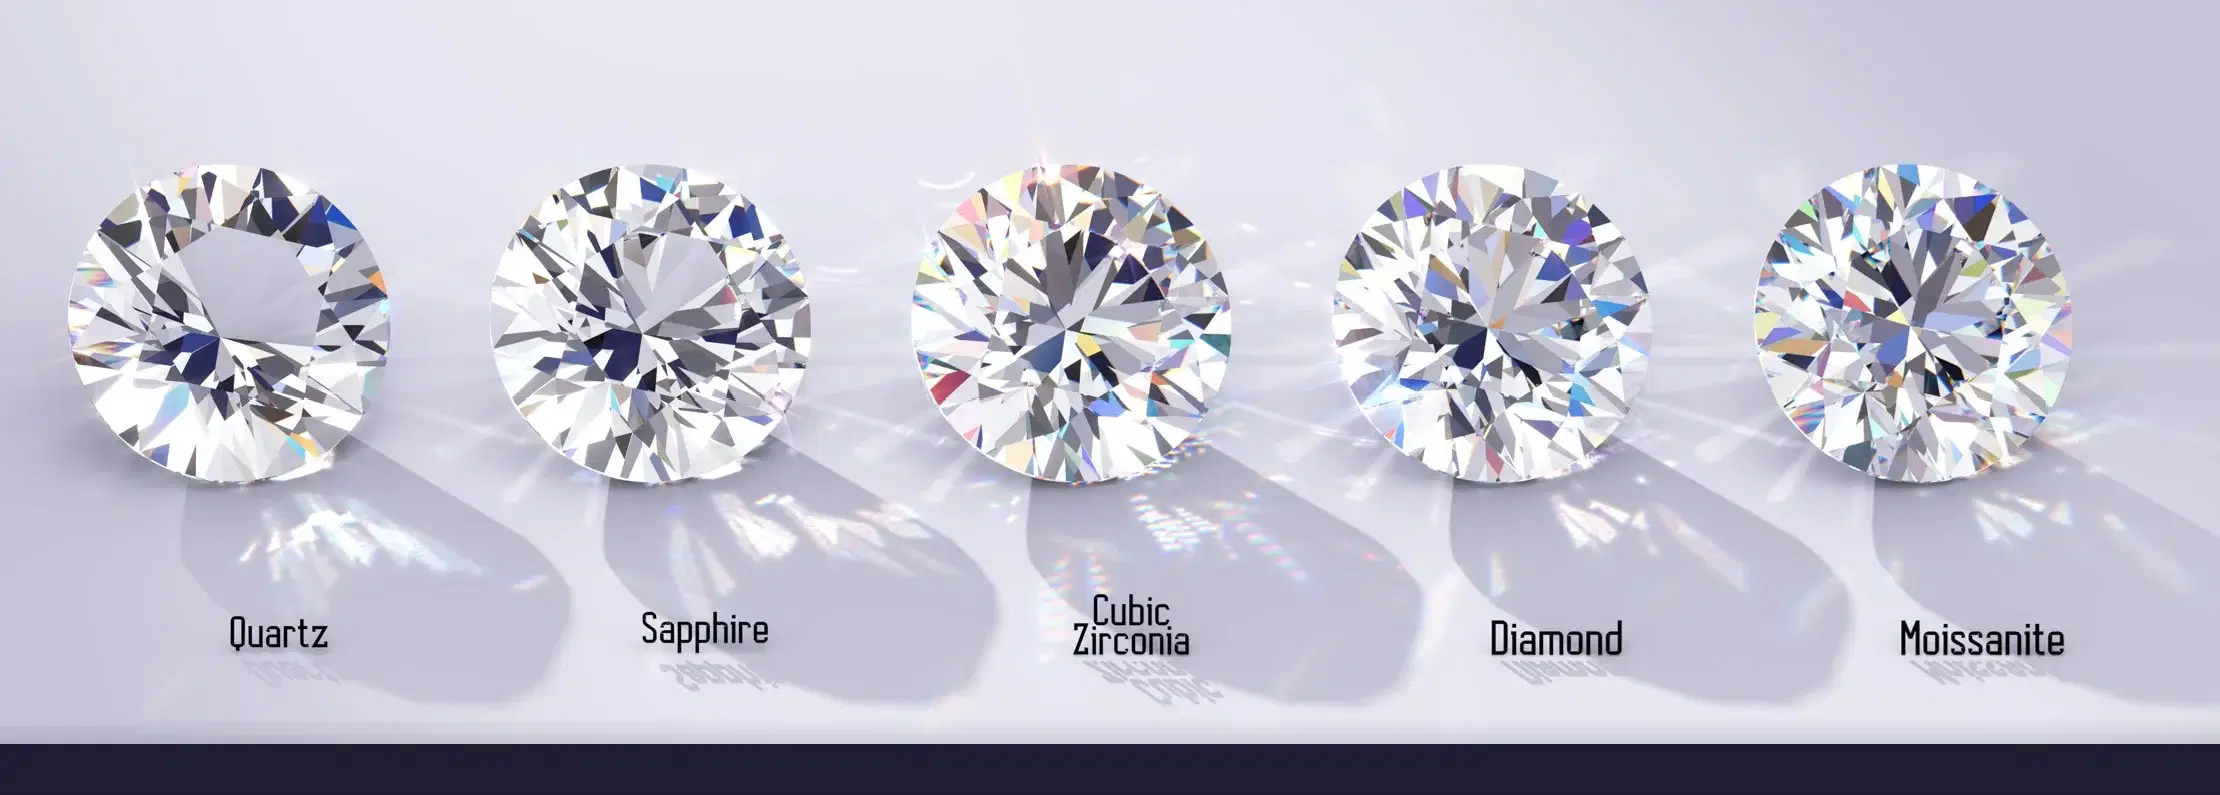 Types of Synthetic Diamonds